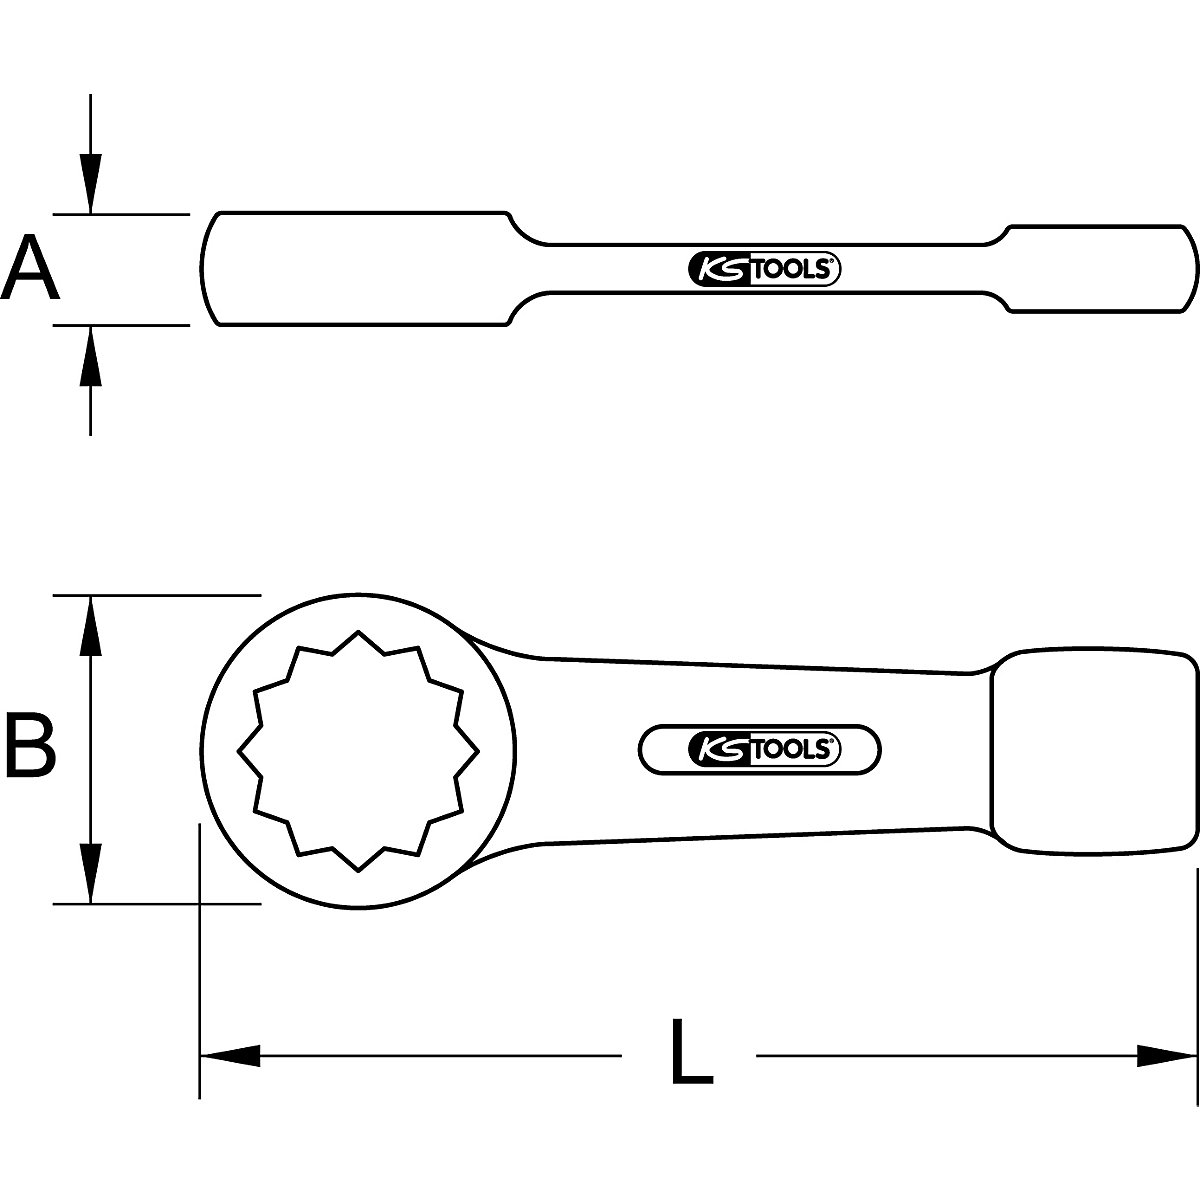 Cheie inelară de impact – KS Tools (Imagine produs 2)-1